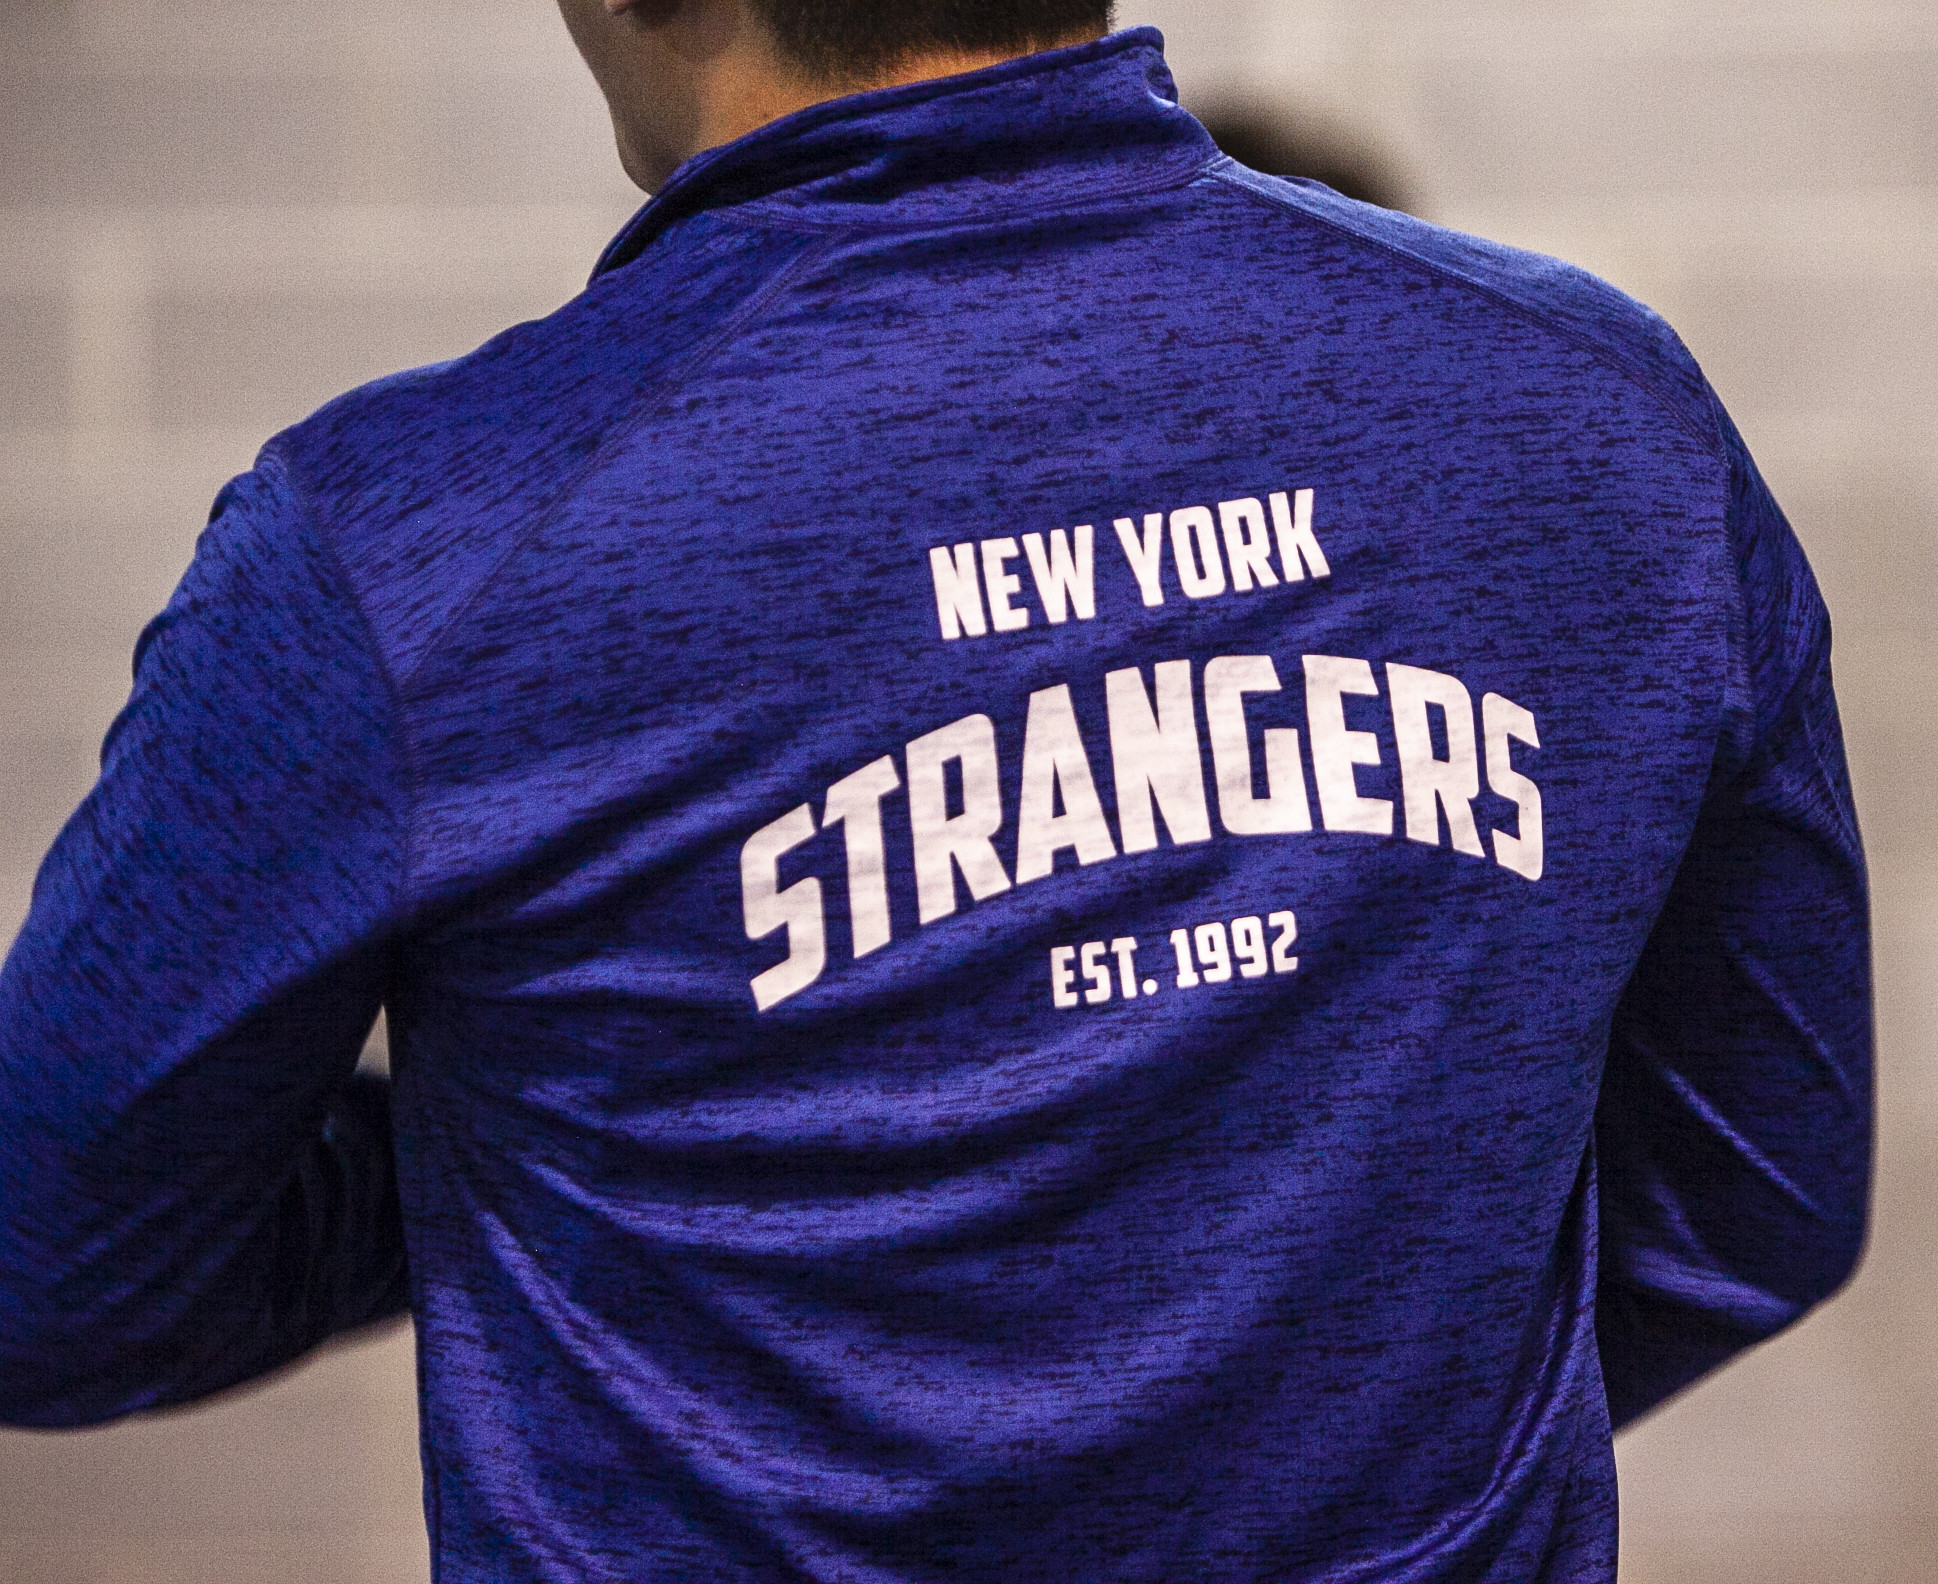 New York Strangers Mini-Mini!